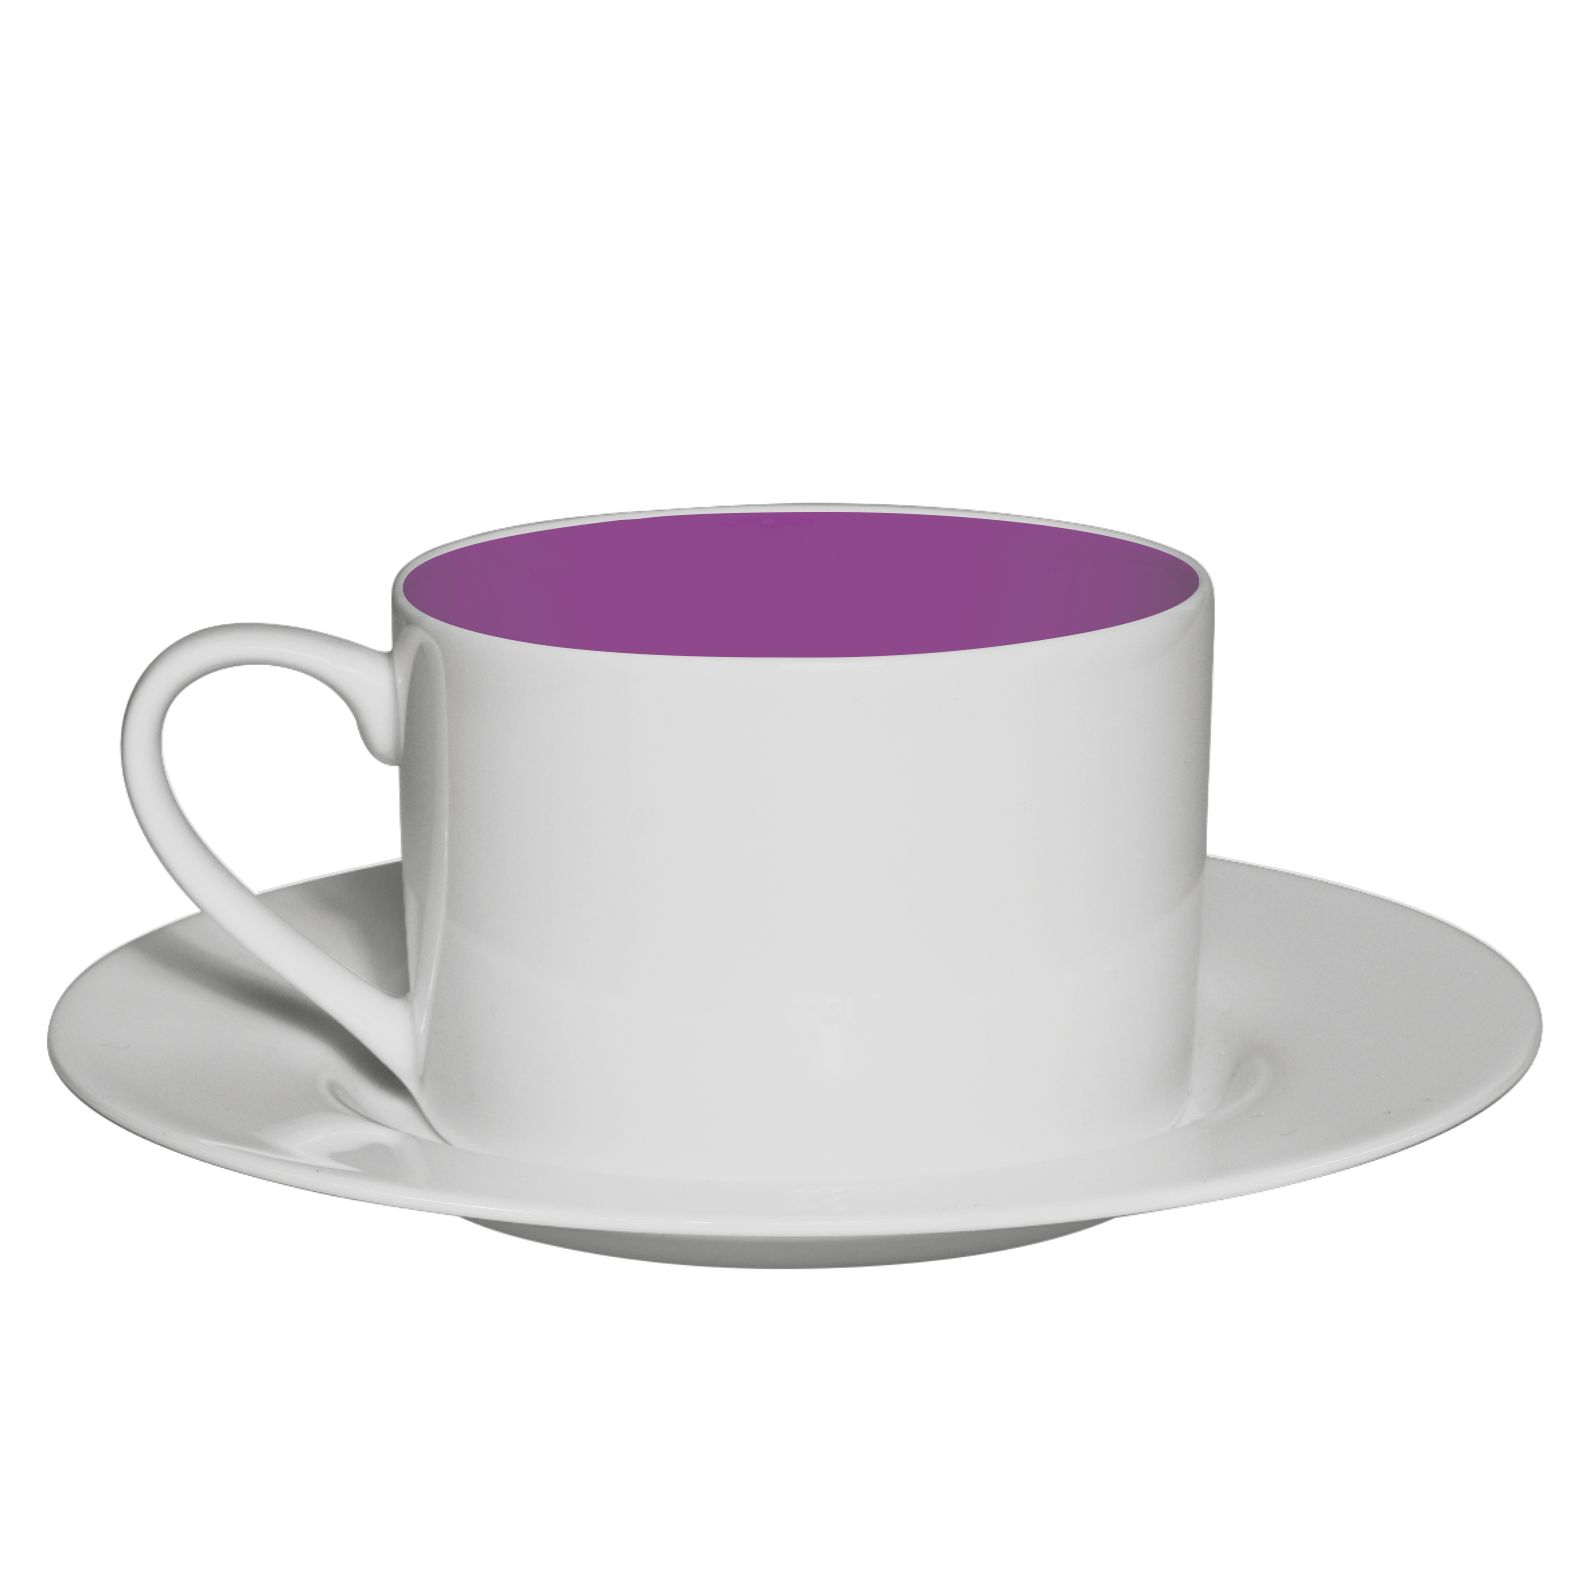 /sites/default/files/2020-03/Fili%C5%BCanka_classic_white-purple.jpg